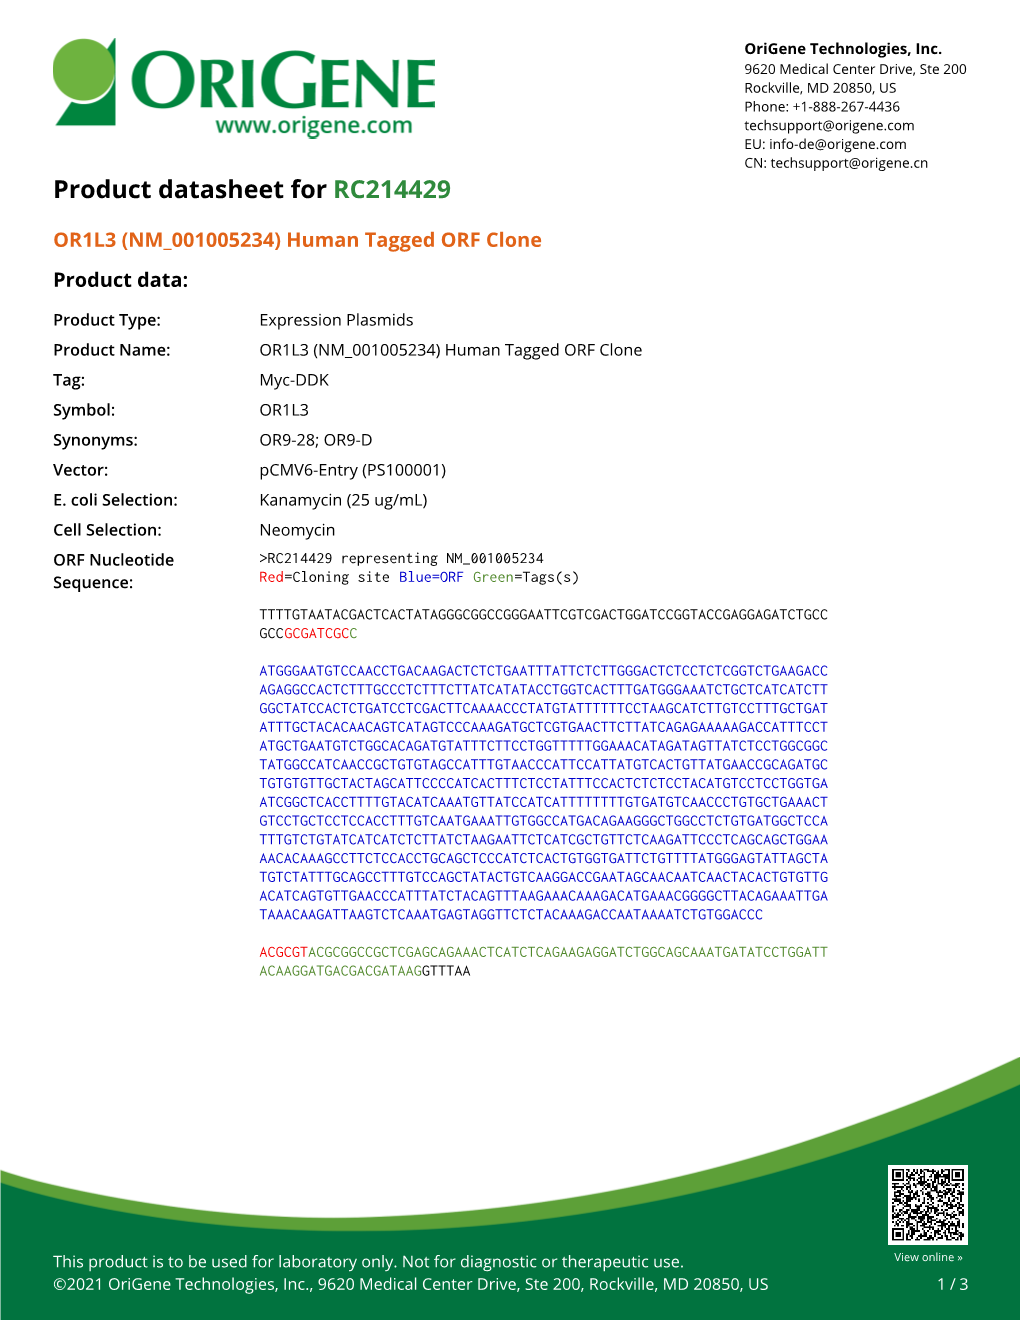 OR1L3 (NM 001005234) Human Tagged ORF Clone – RC214429